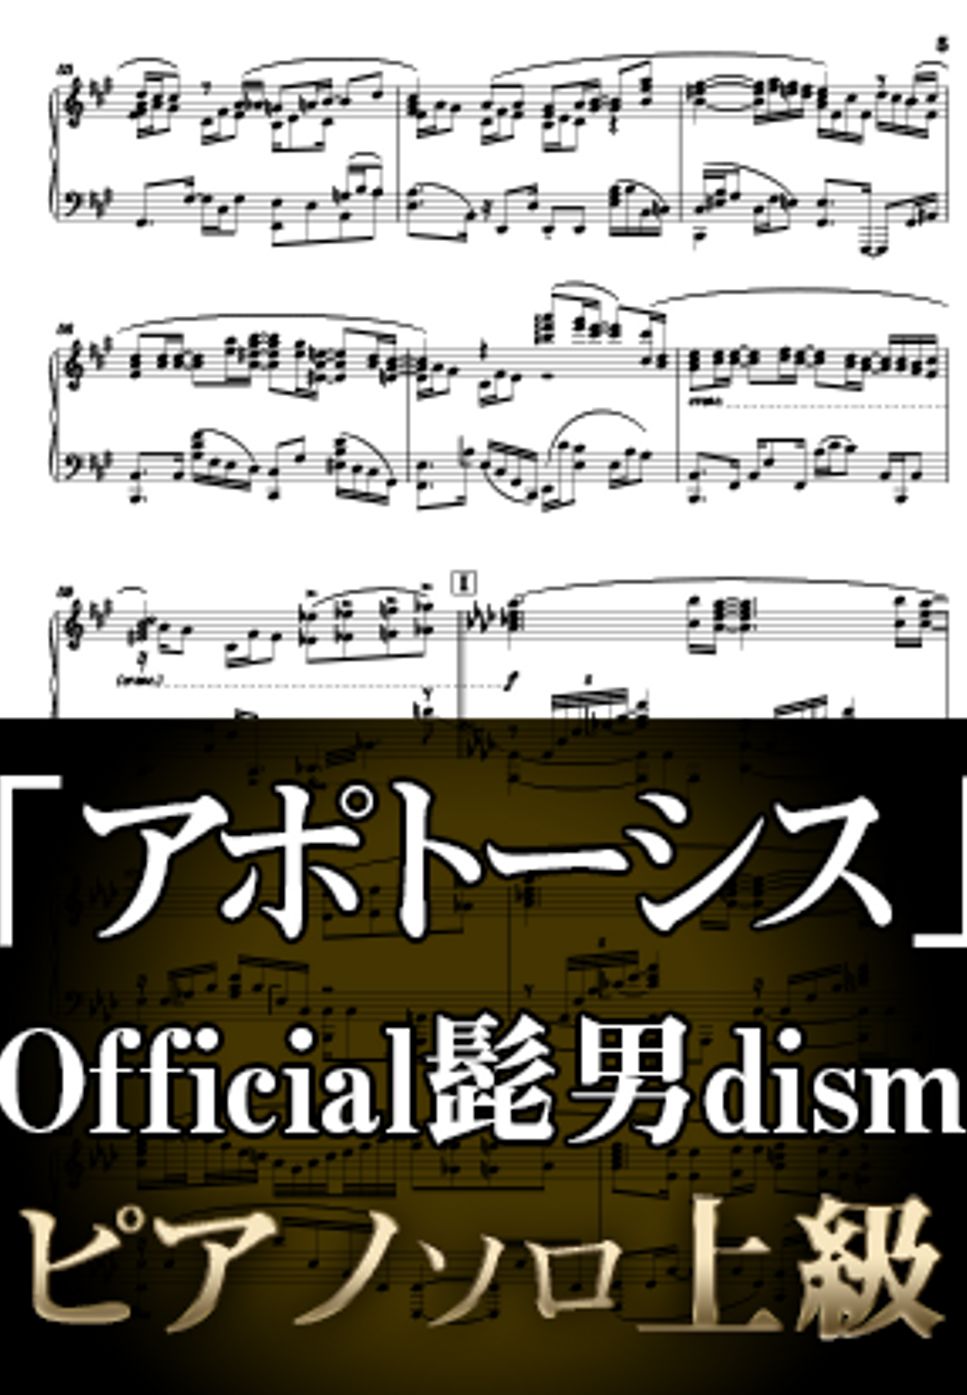 Official髭男dism - アポトーシス (ピアノソロ上級  / 「Apple Music 2021 Summer キャンペーン」TVCM) by Suu